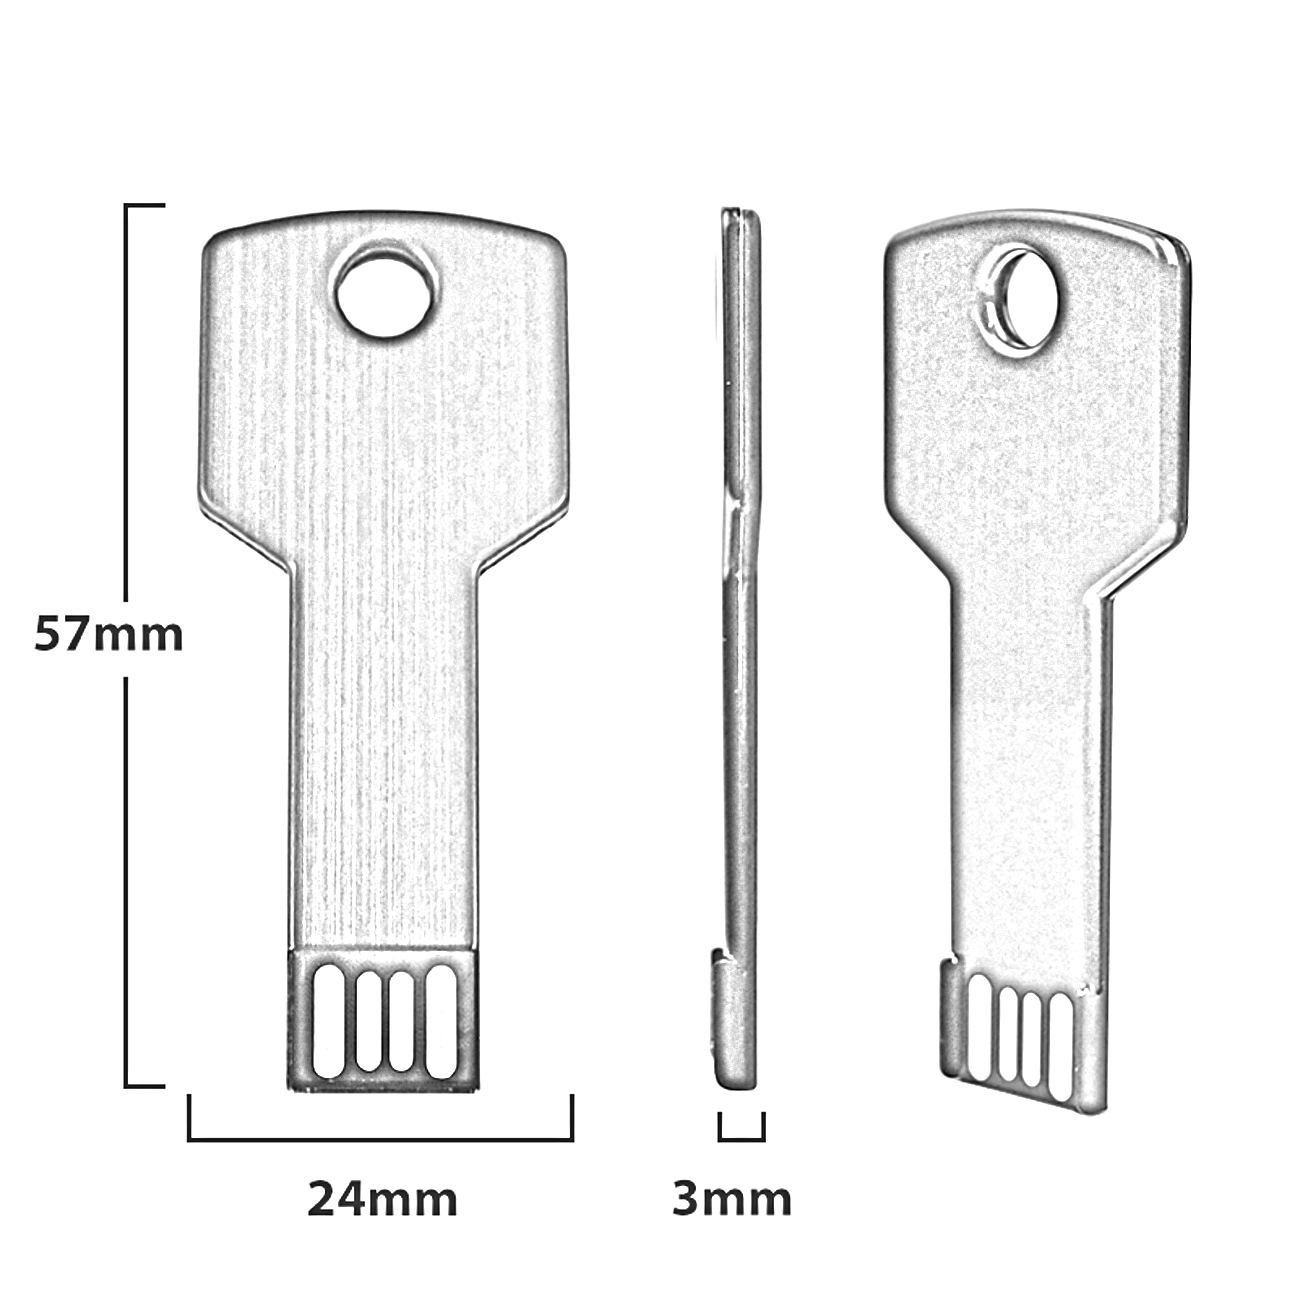 USB GERMANY Key Lila (Lila, USB-Stick GB) 32GB 32